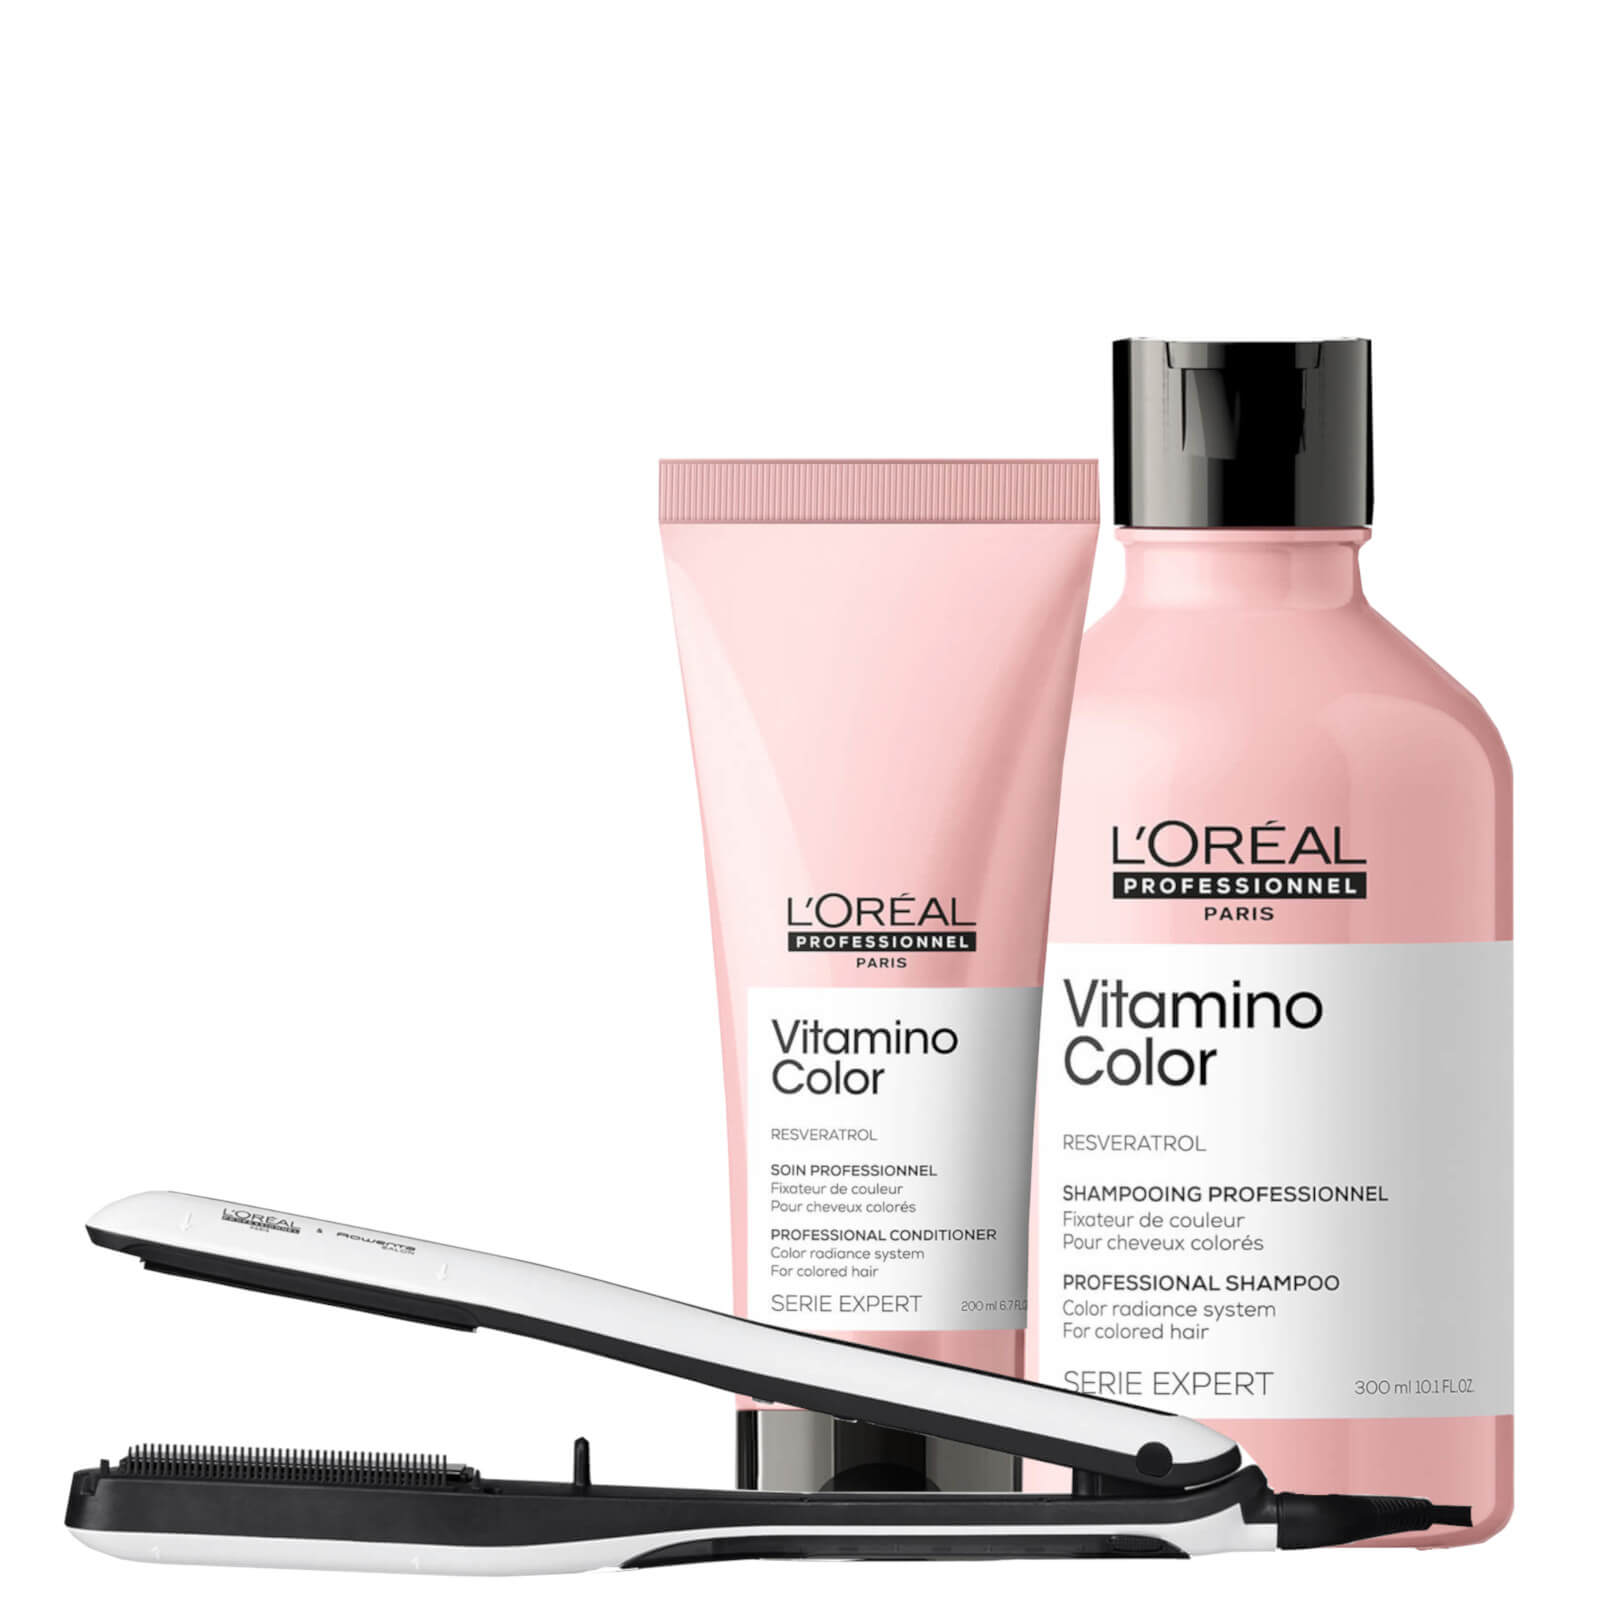 L'Oréal Professionnel LOréal Professionnel Vitamino Color og Steampod -pakke